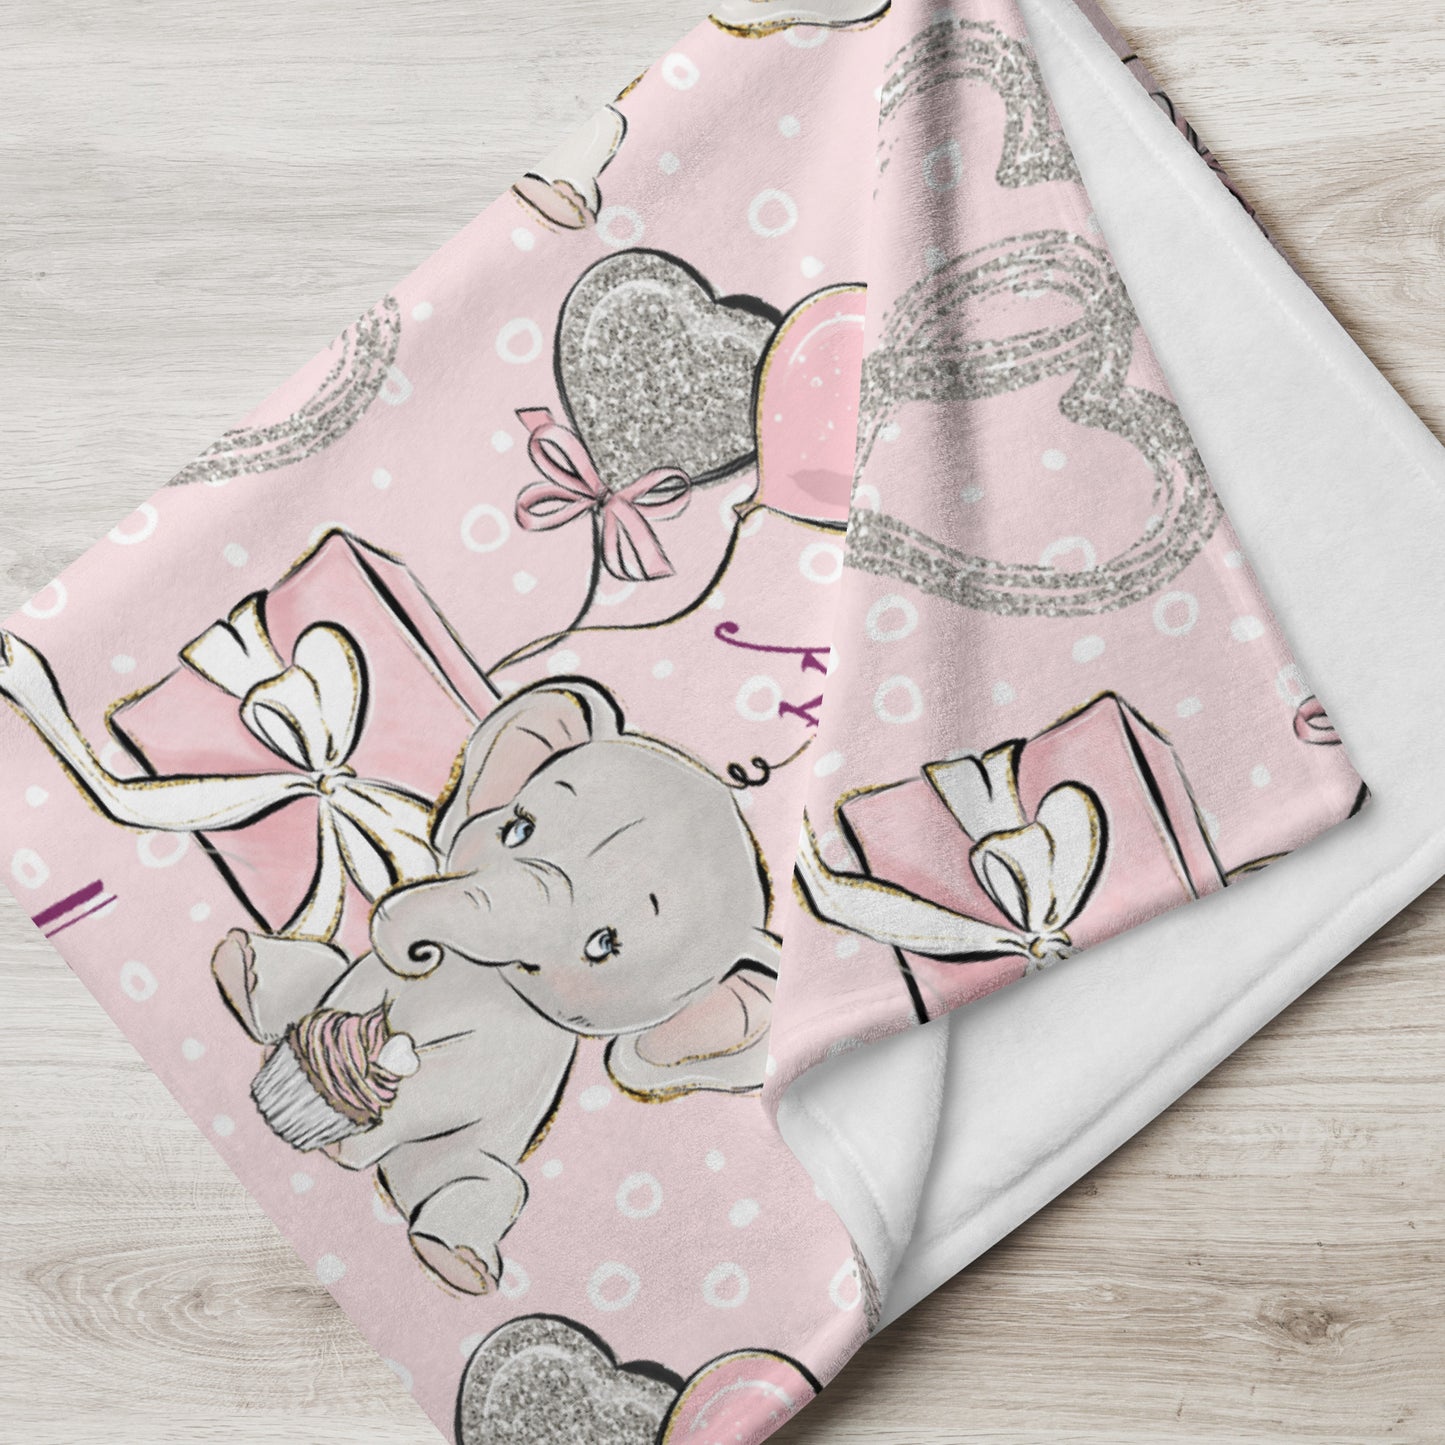 Kids Personalized Elephant Throw Blanket for kids